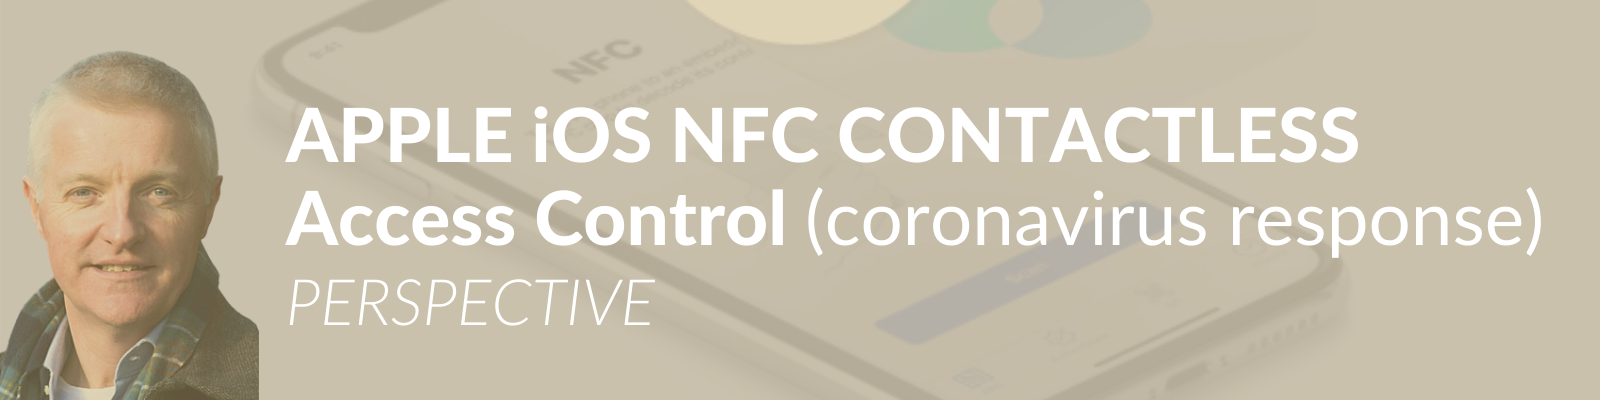 Apple iOS NFC Contactless Access Control (coronavirus response)